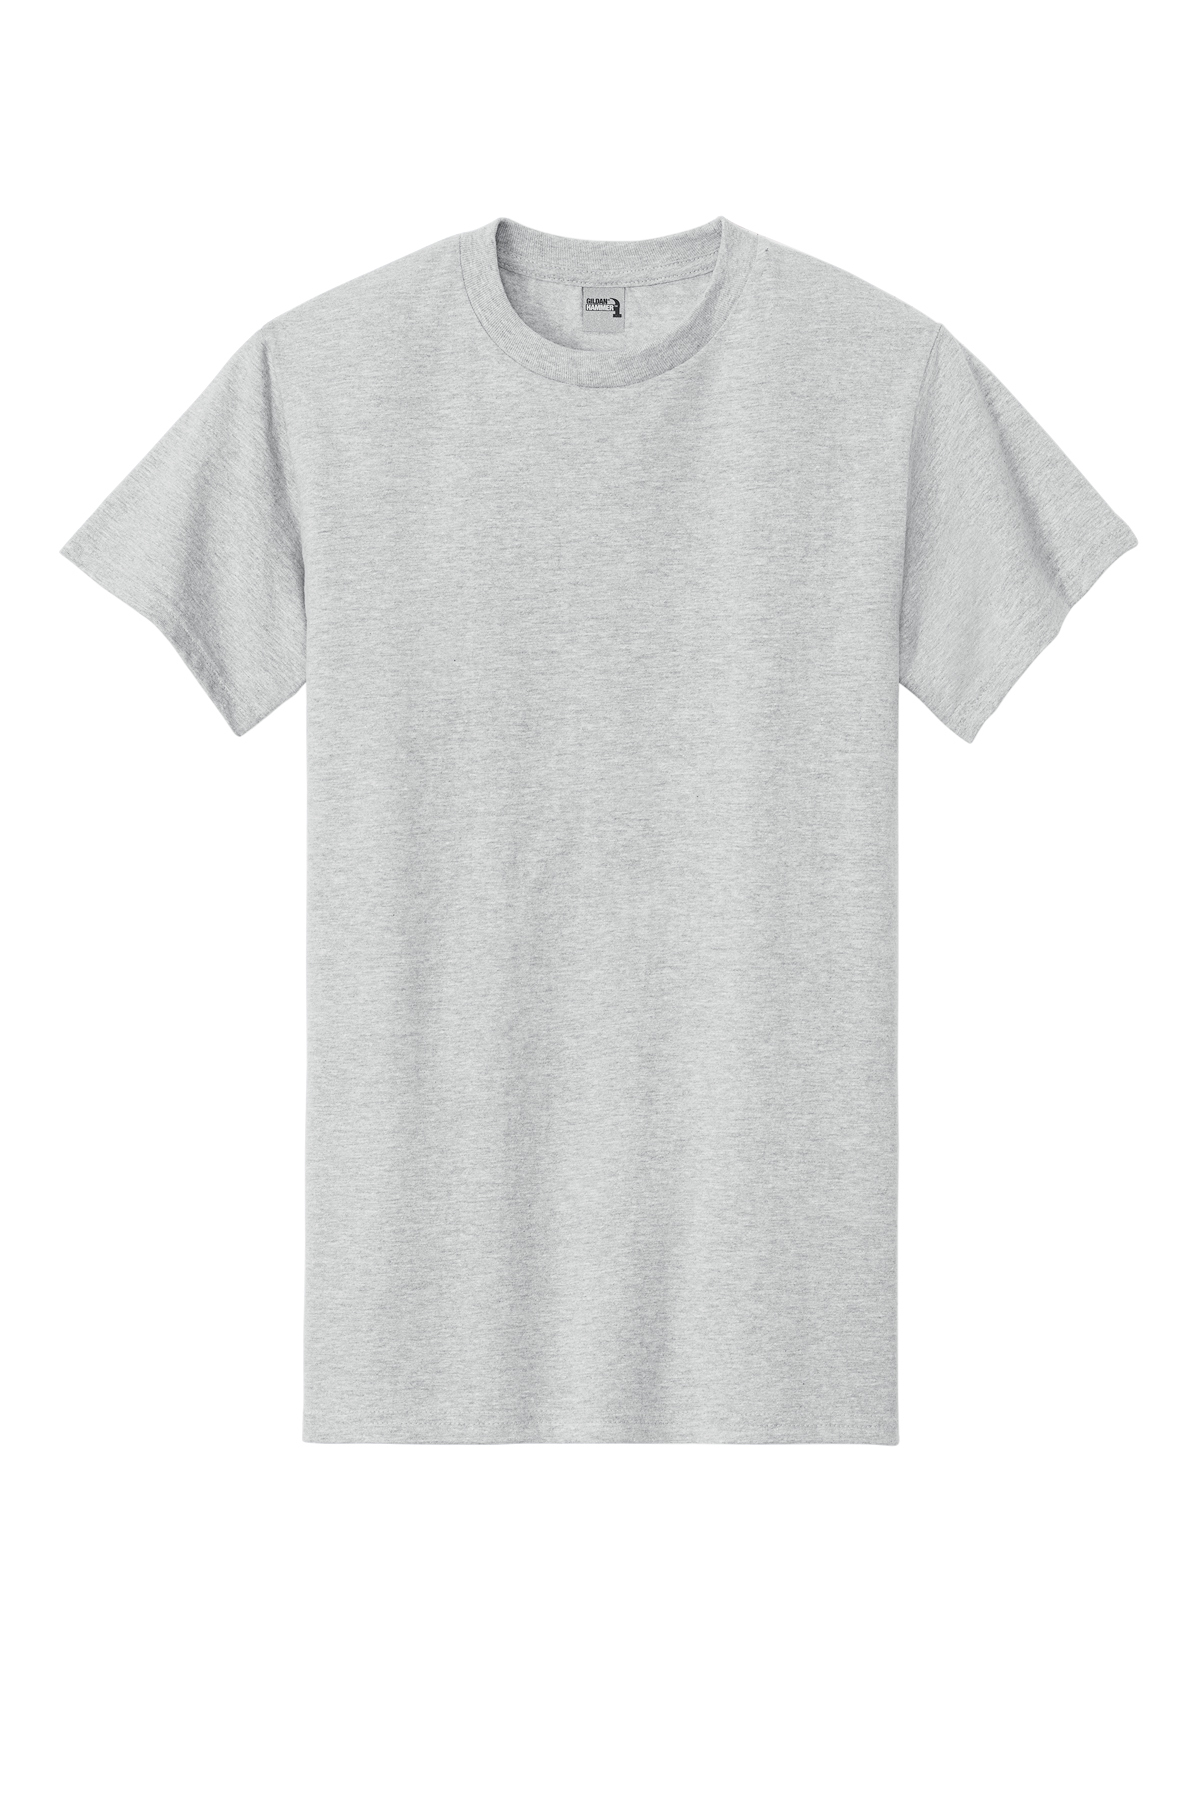 Gildan Hammer T-Shirt | Product | SanMar